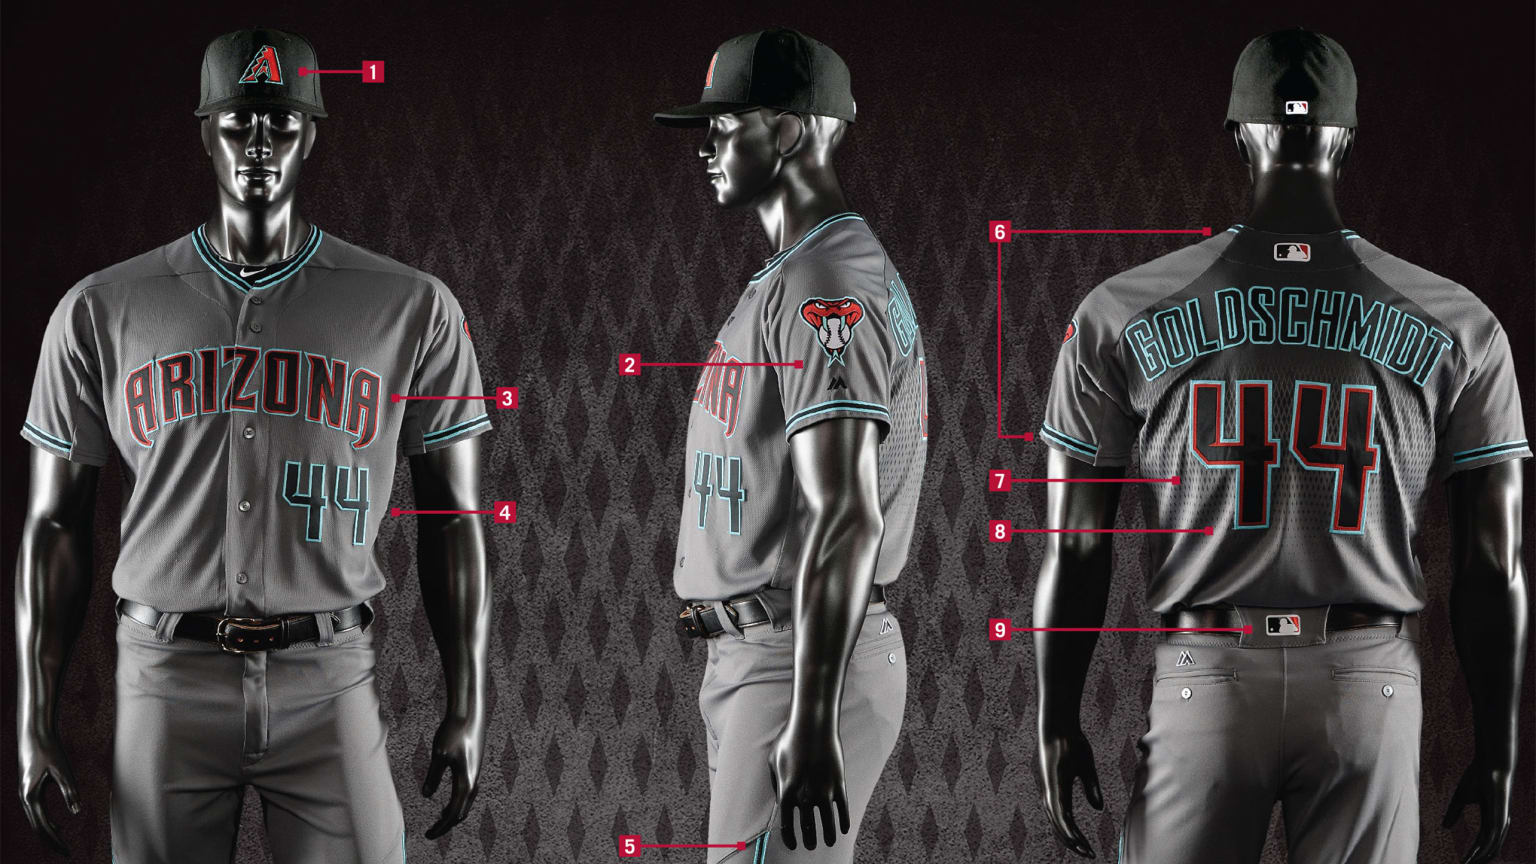 Arizona Diamondbacks unveil 2016 jerseys 